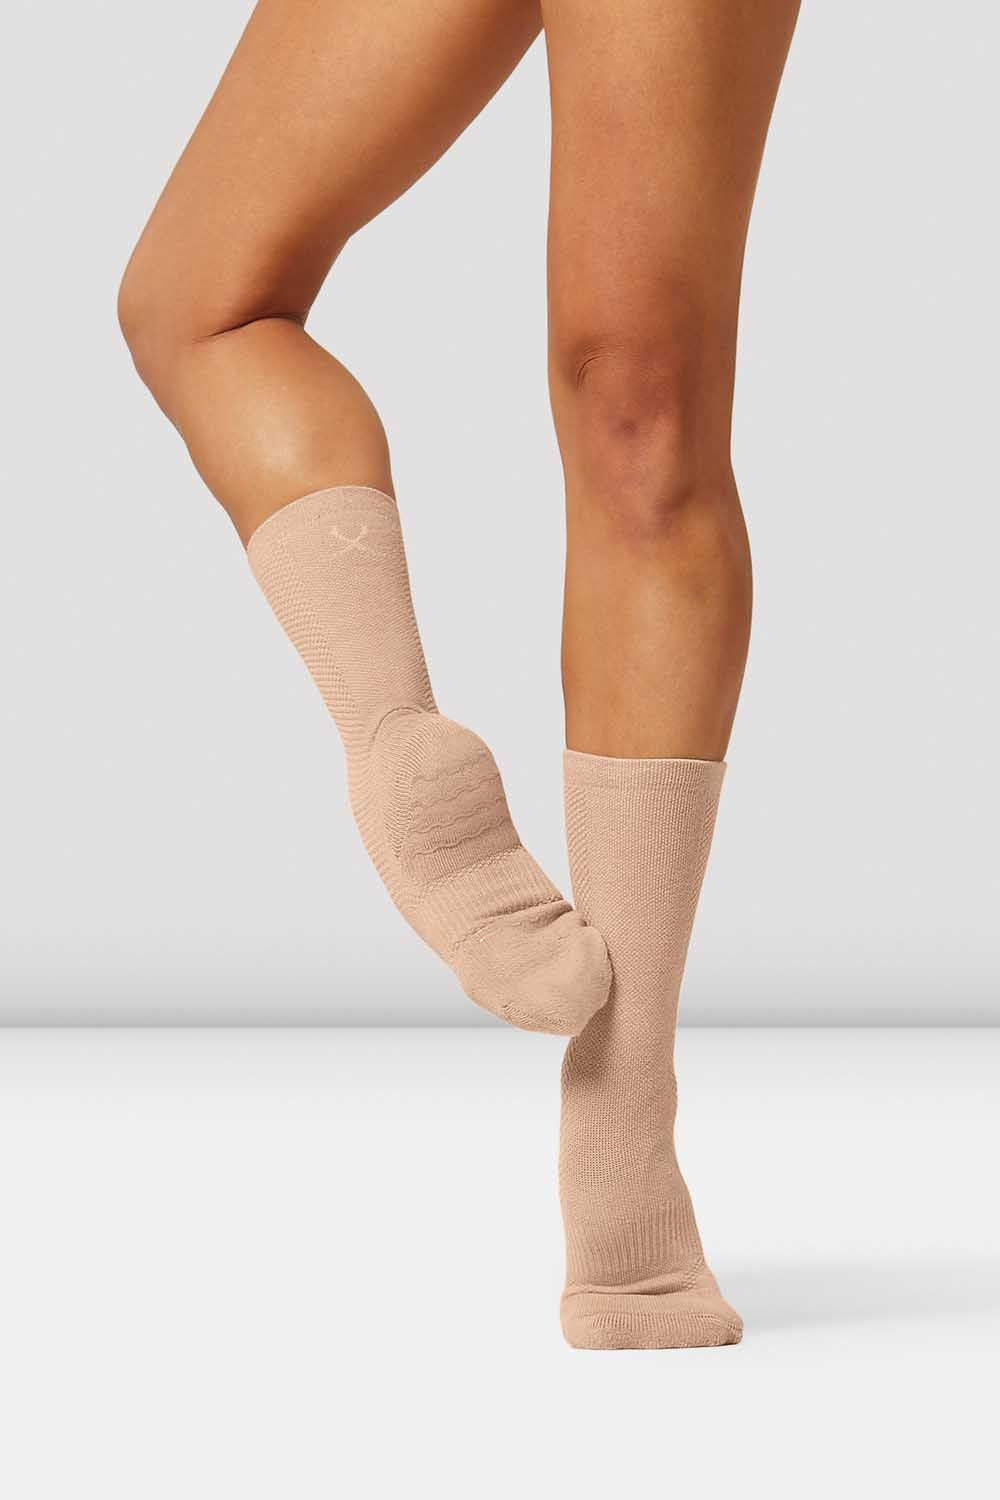 Blochsox Dance Socks - A1000